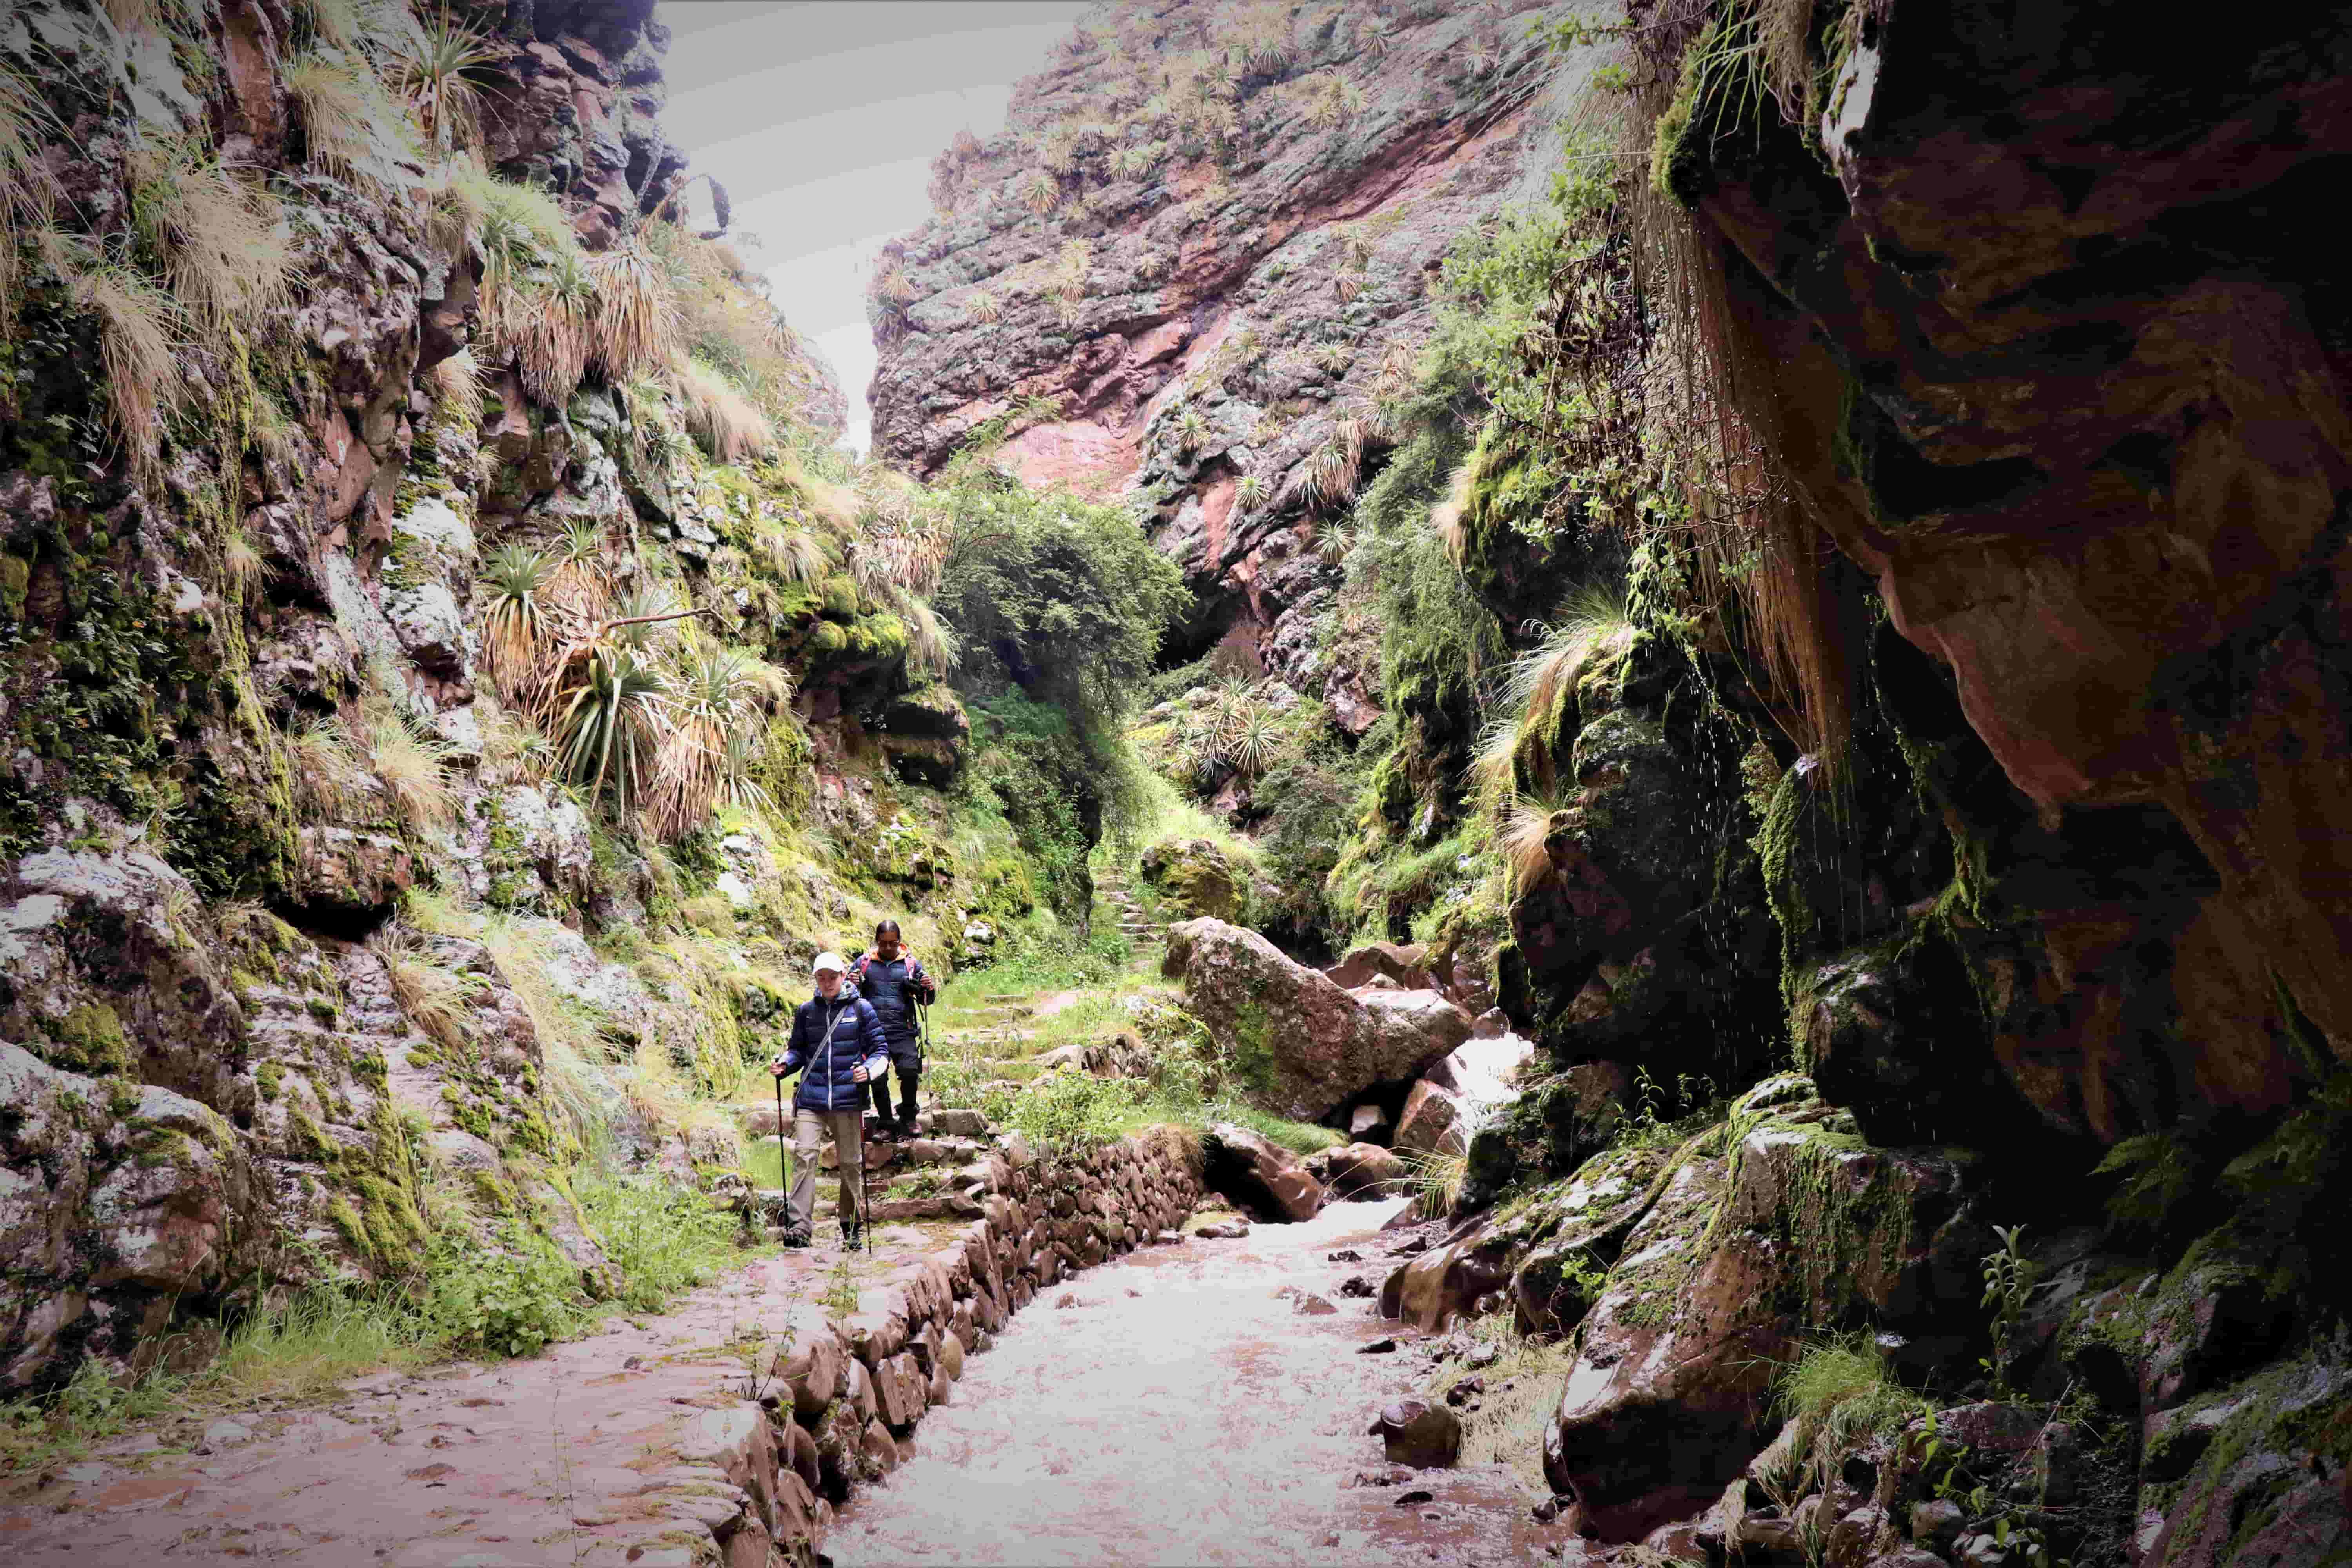  Huchuy Qosqo Canyon - Alternative Inca Trail